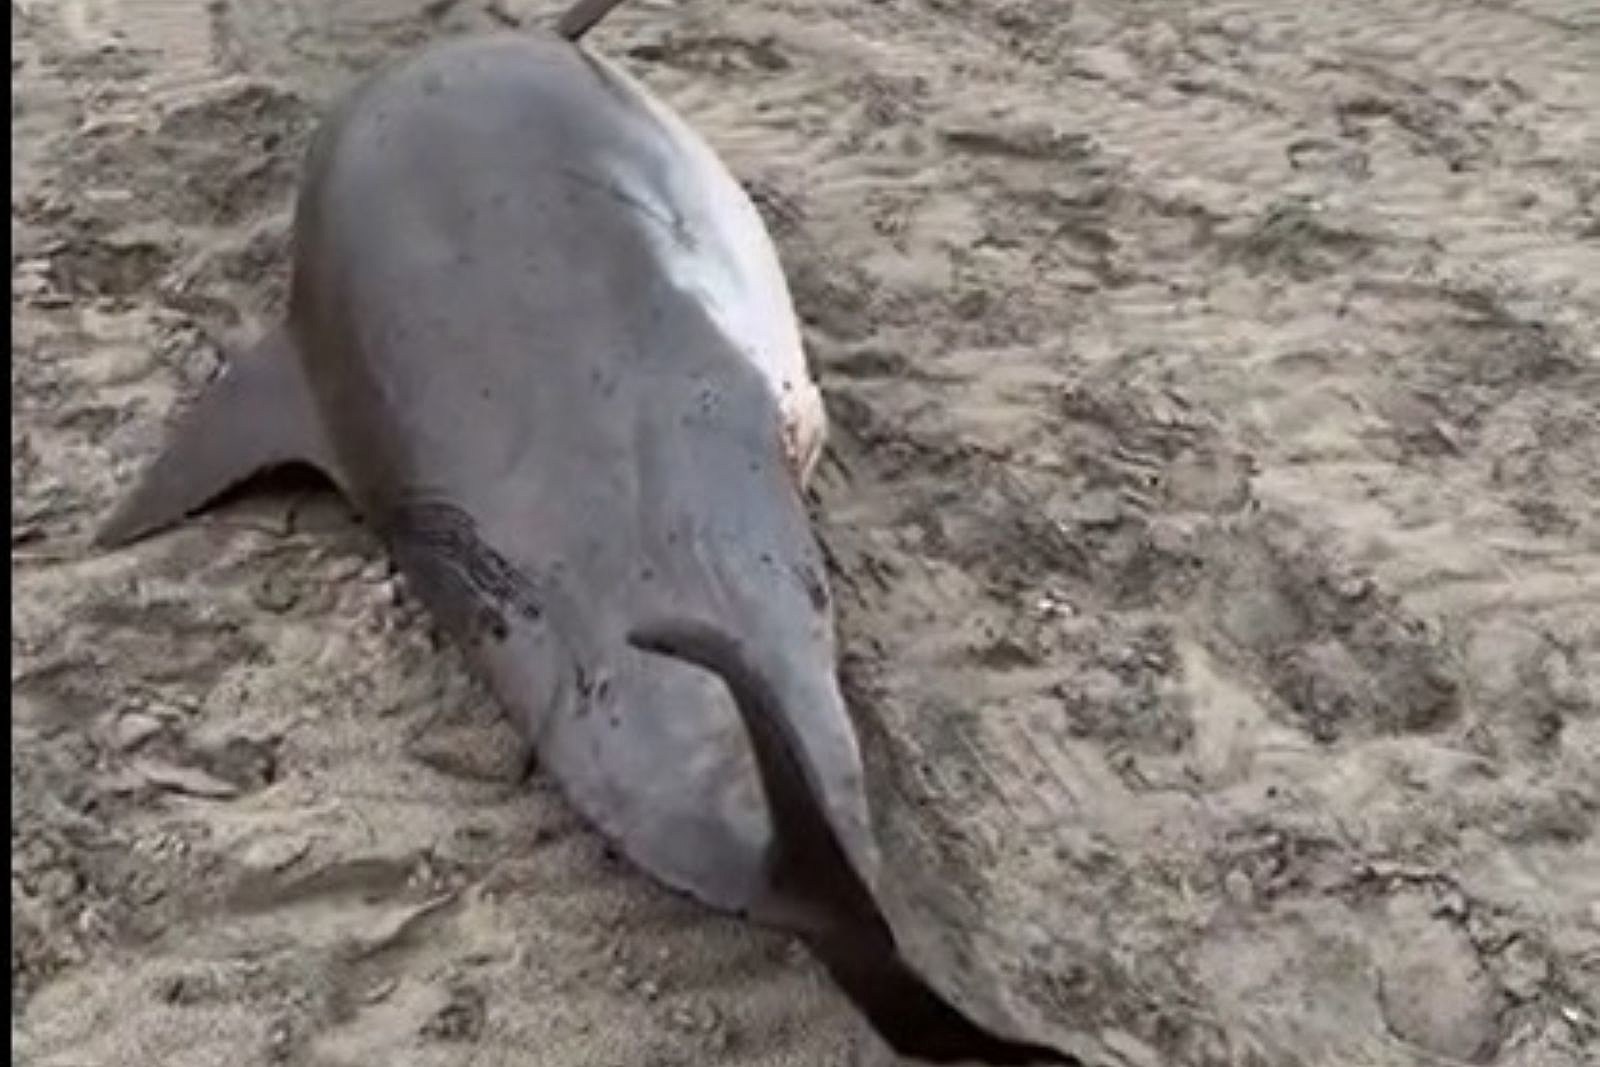 Las Vegas dolphin attraction closed after third mammal death, Las Vegas